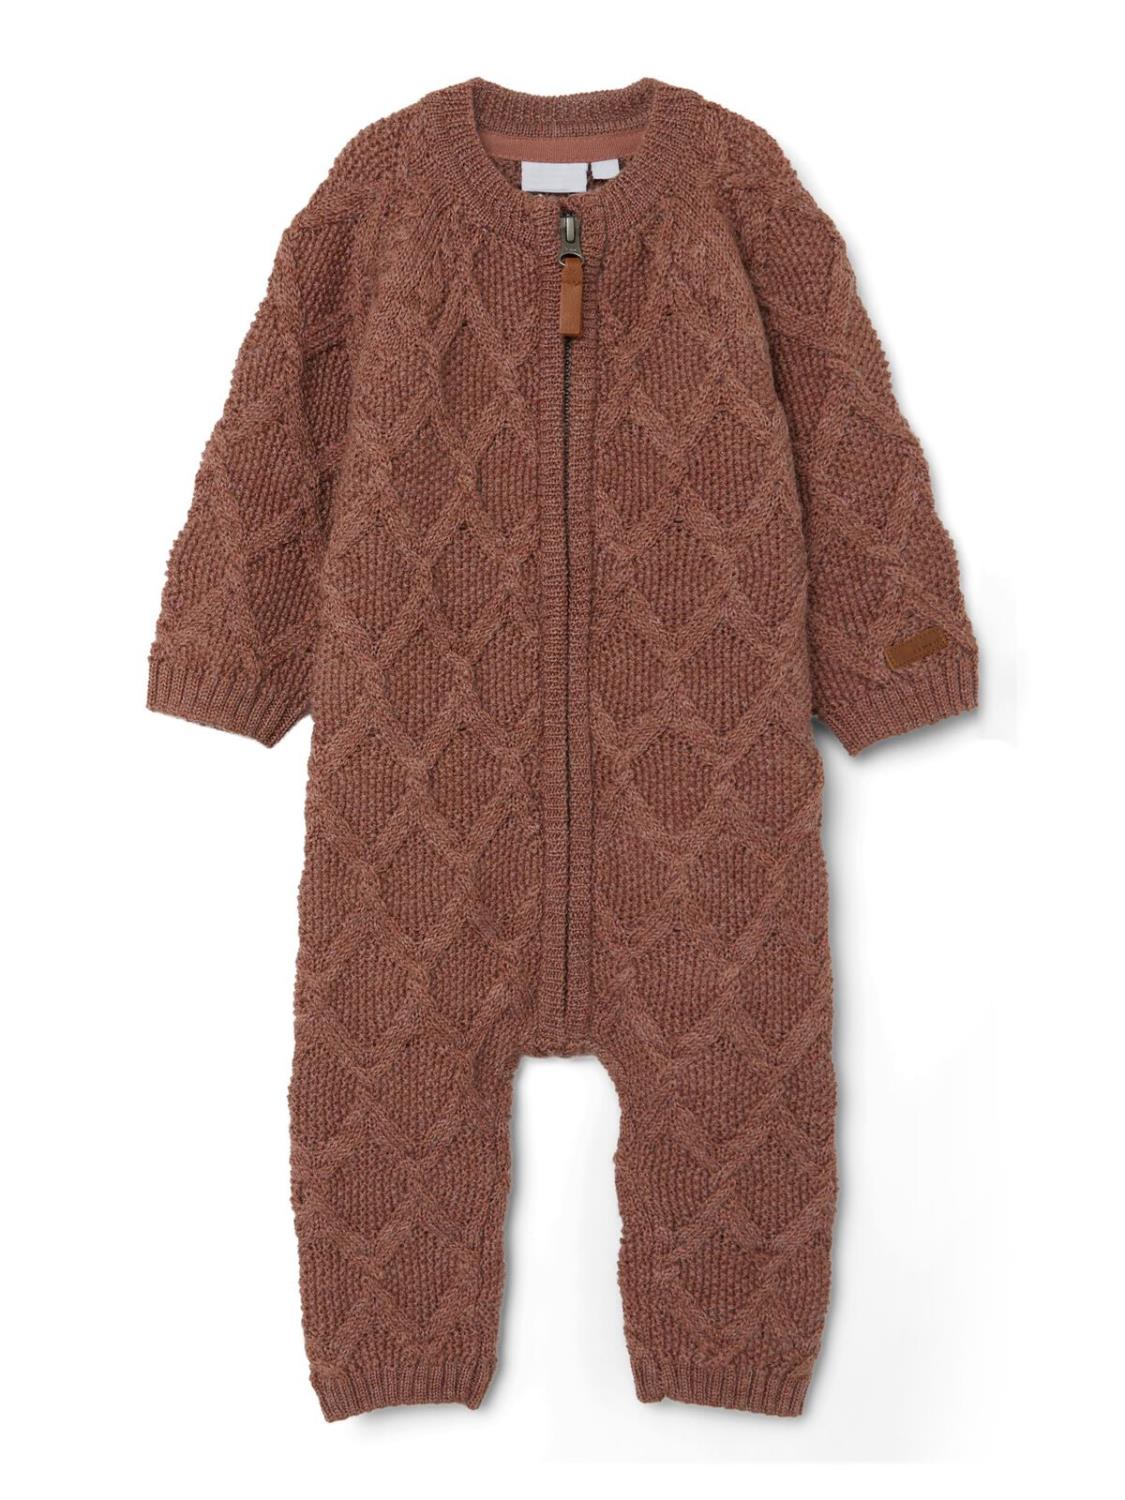 Wrilla Wool Knit Suit, Mini - Cognac